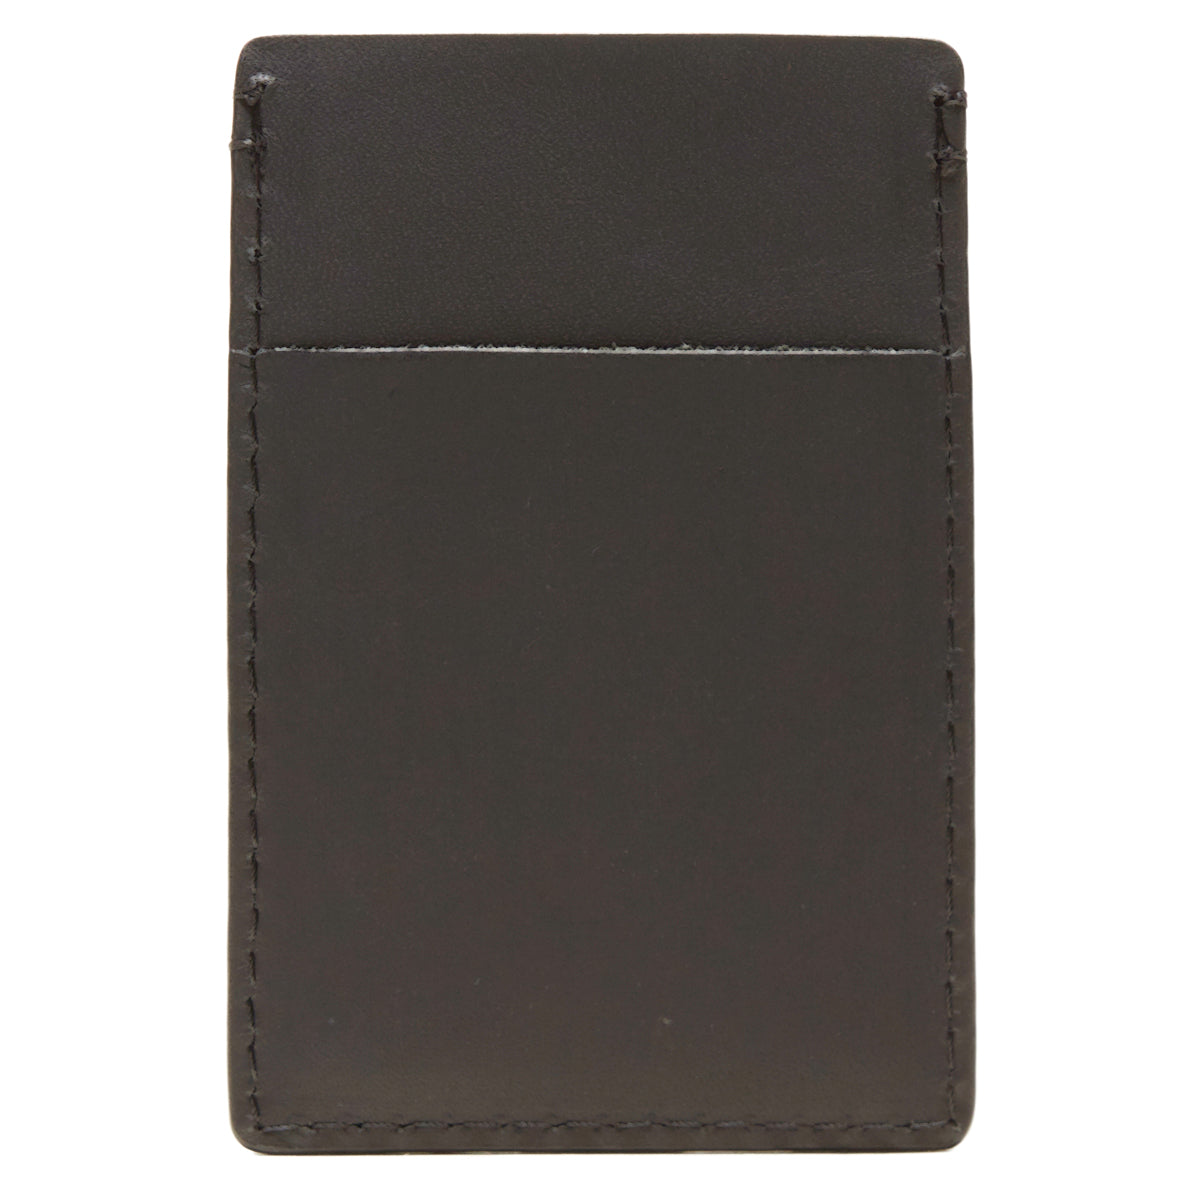 Brixton Traditional Card Holder Wallet - Black image 2